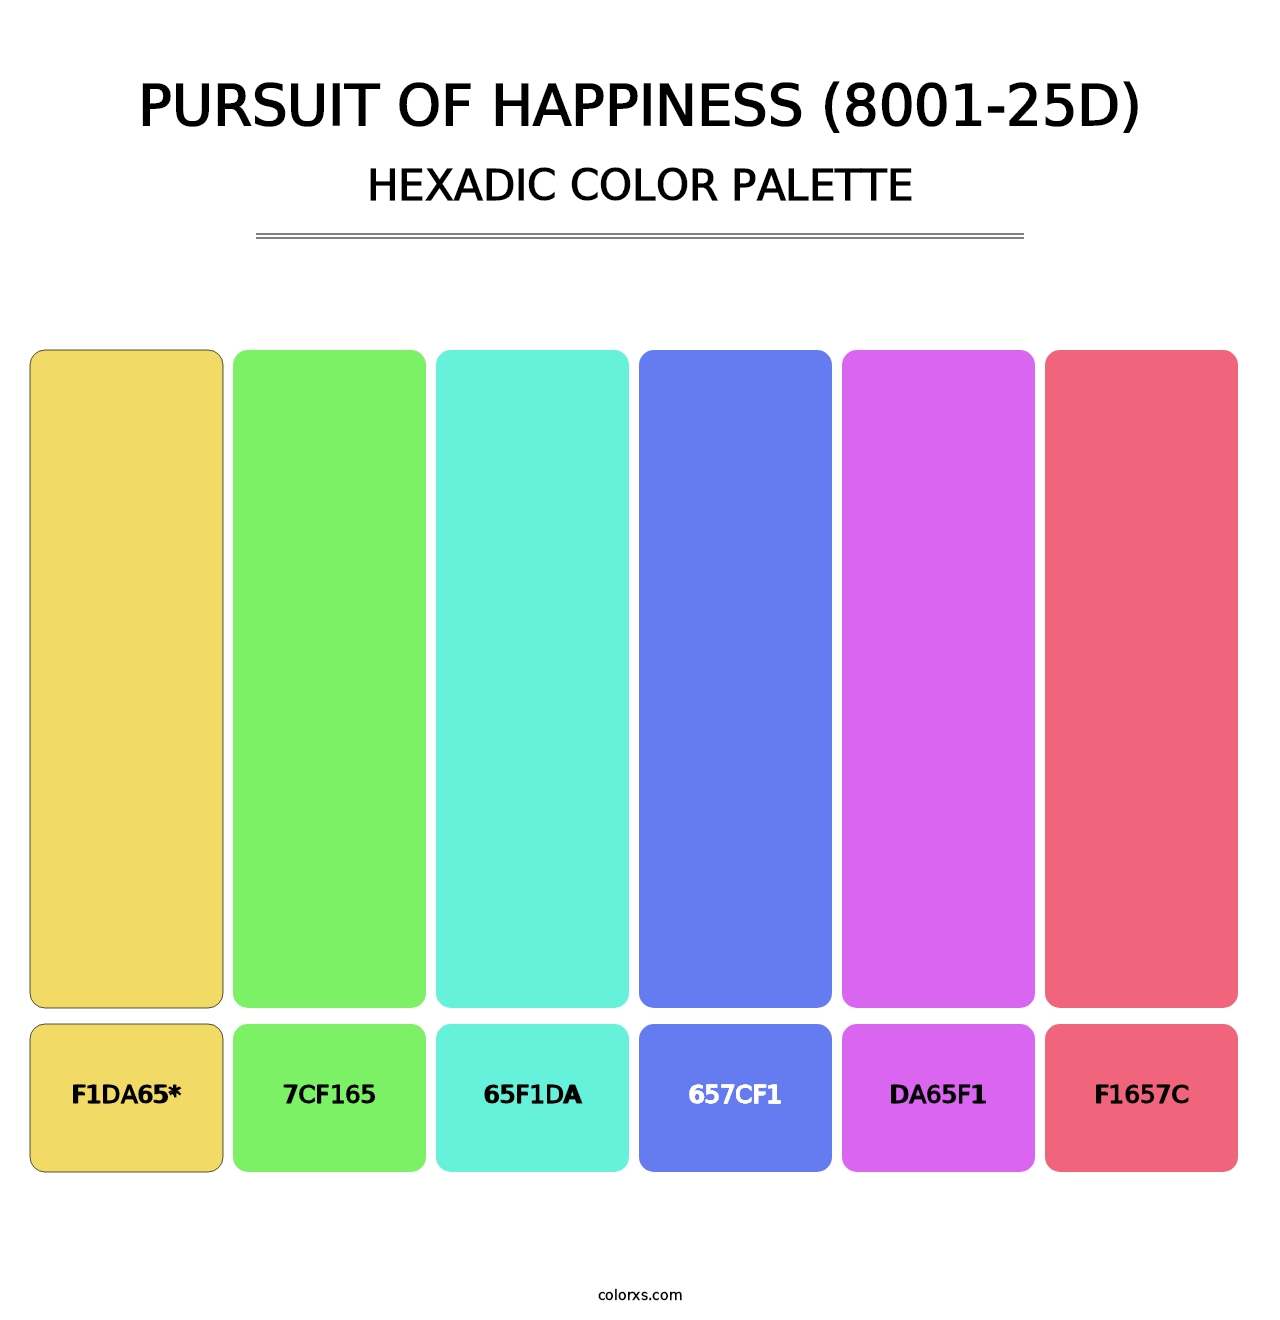 Pursuit of Happiness (8001-25D) - Hexadic Color Palette